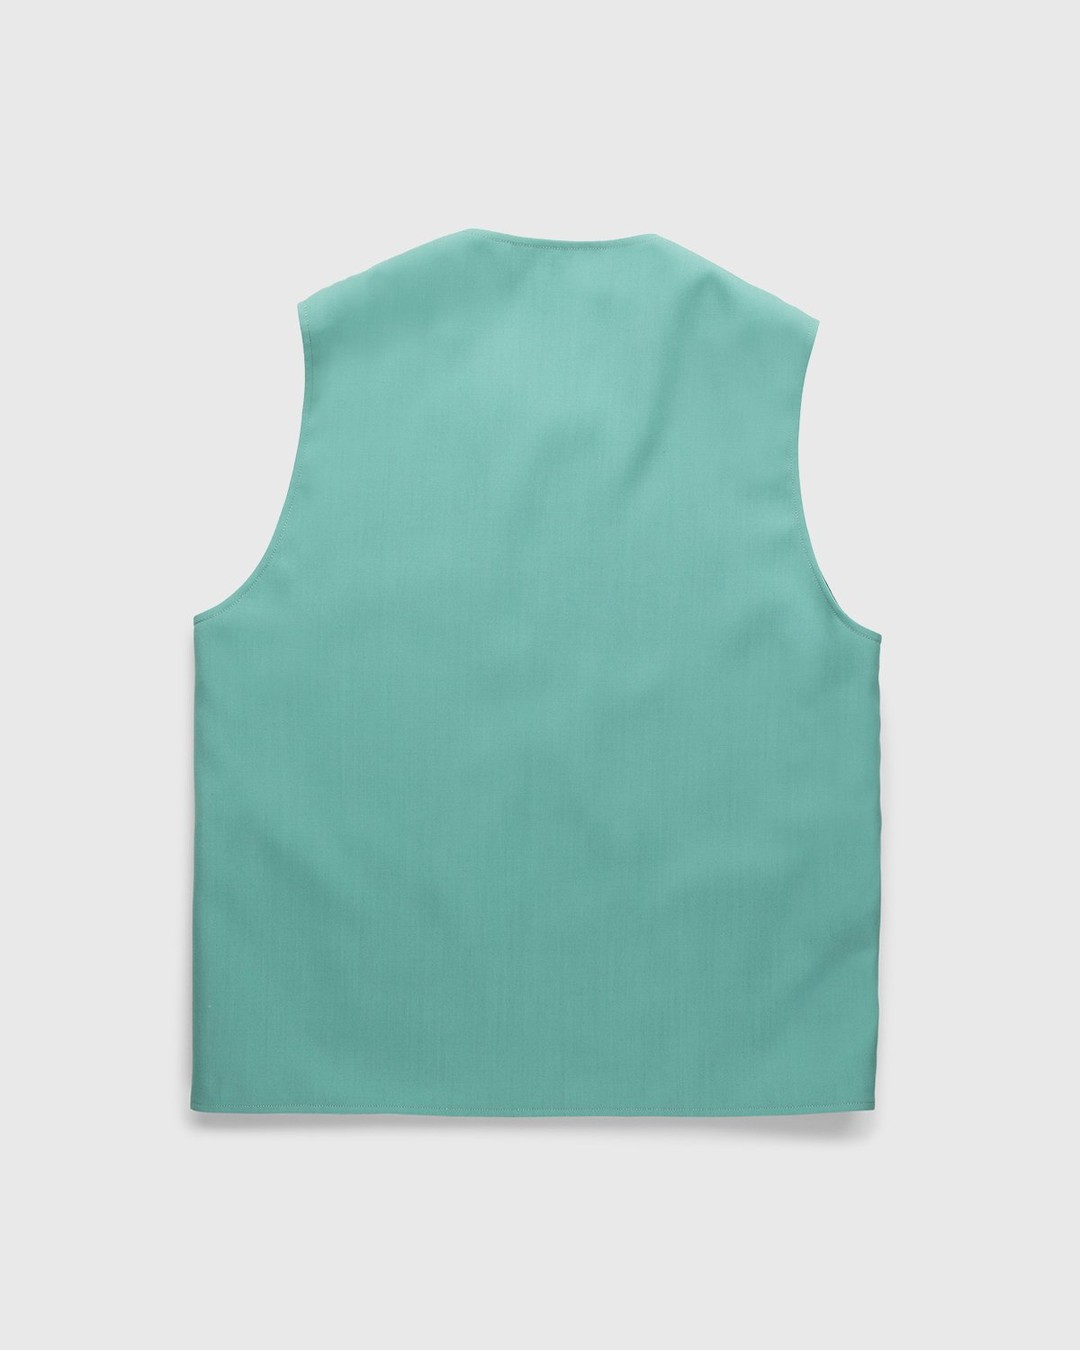 Jil Sander – Vest Bright Green - Outerwear - Green - Image 2